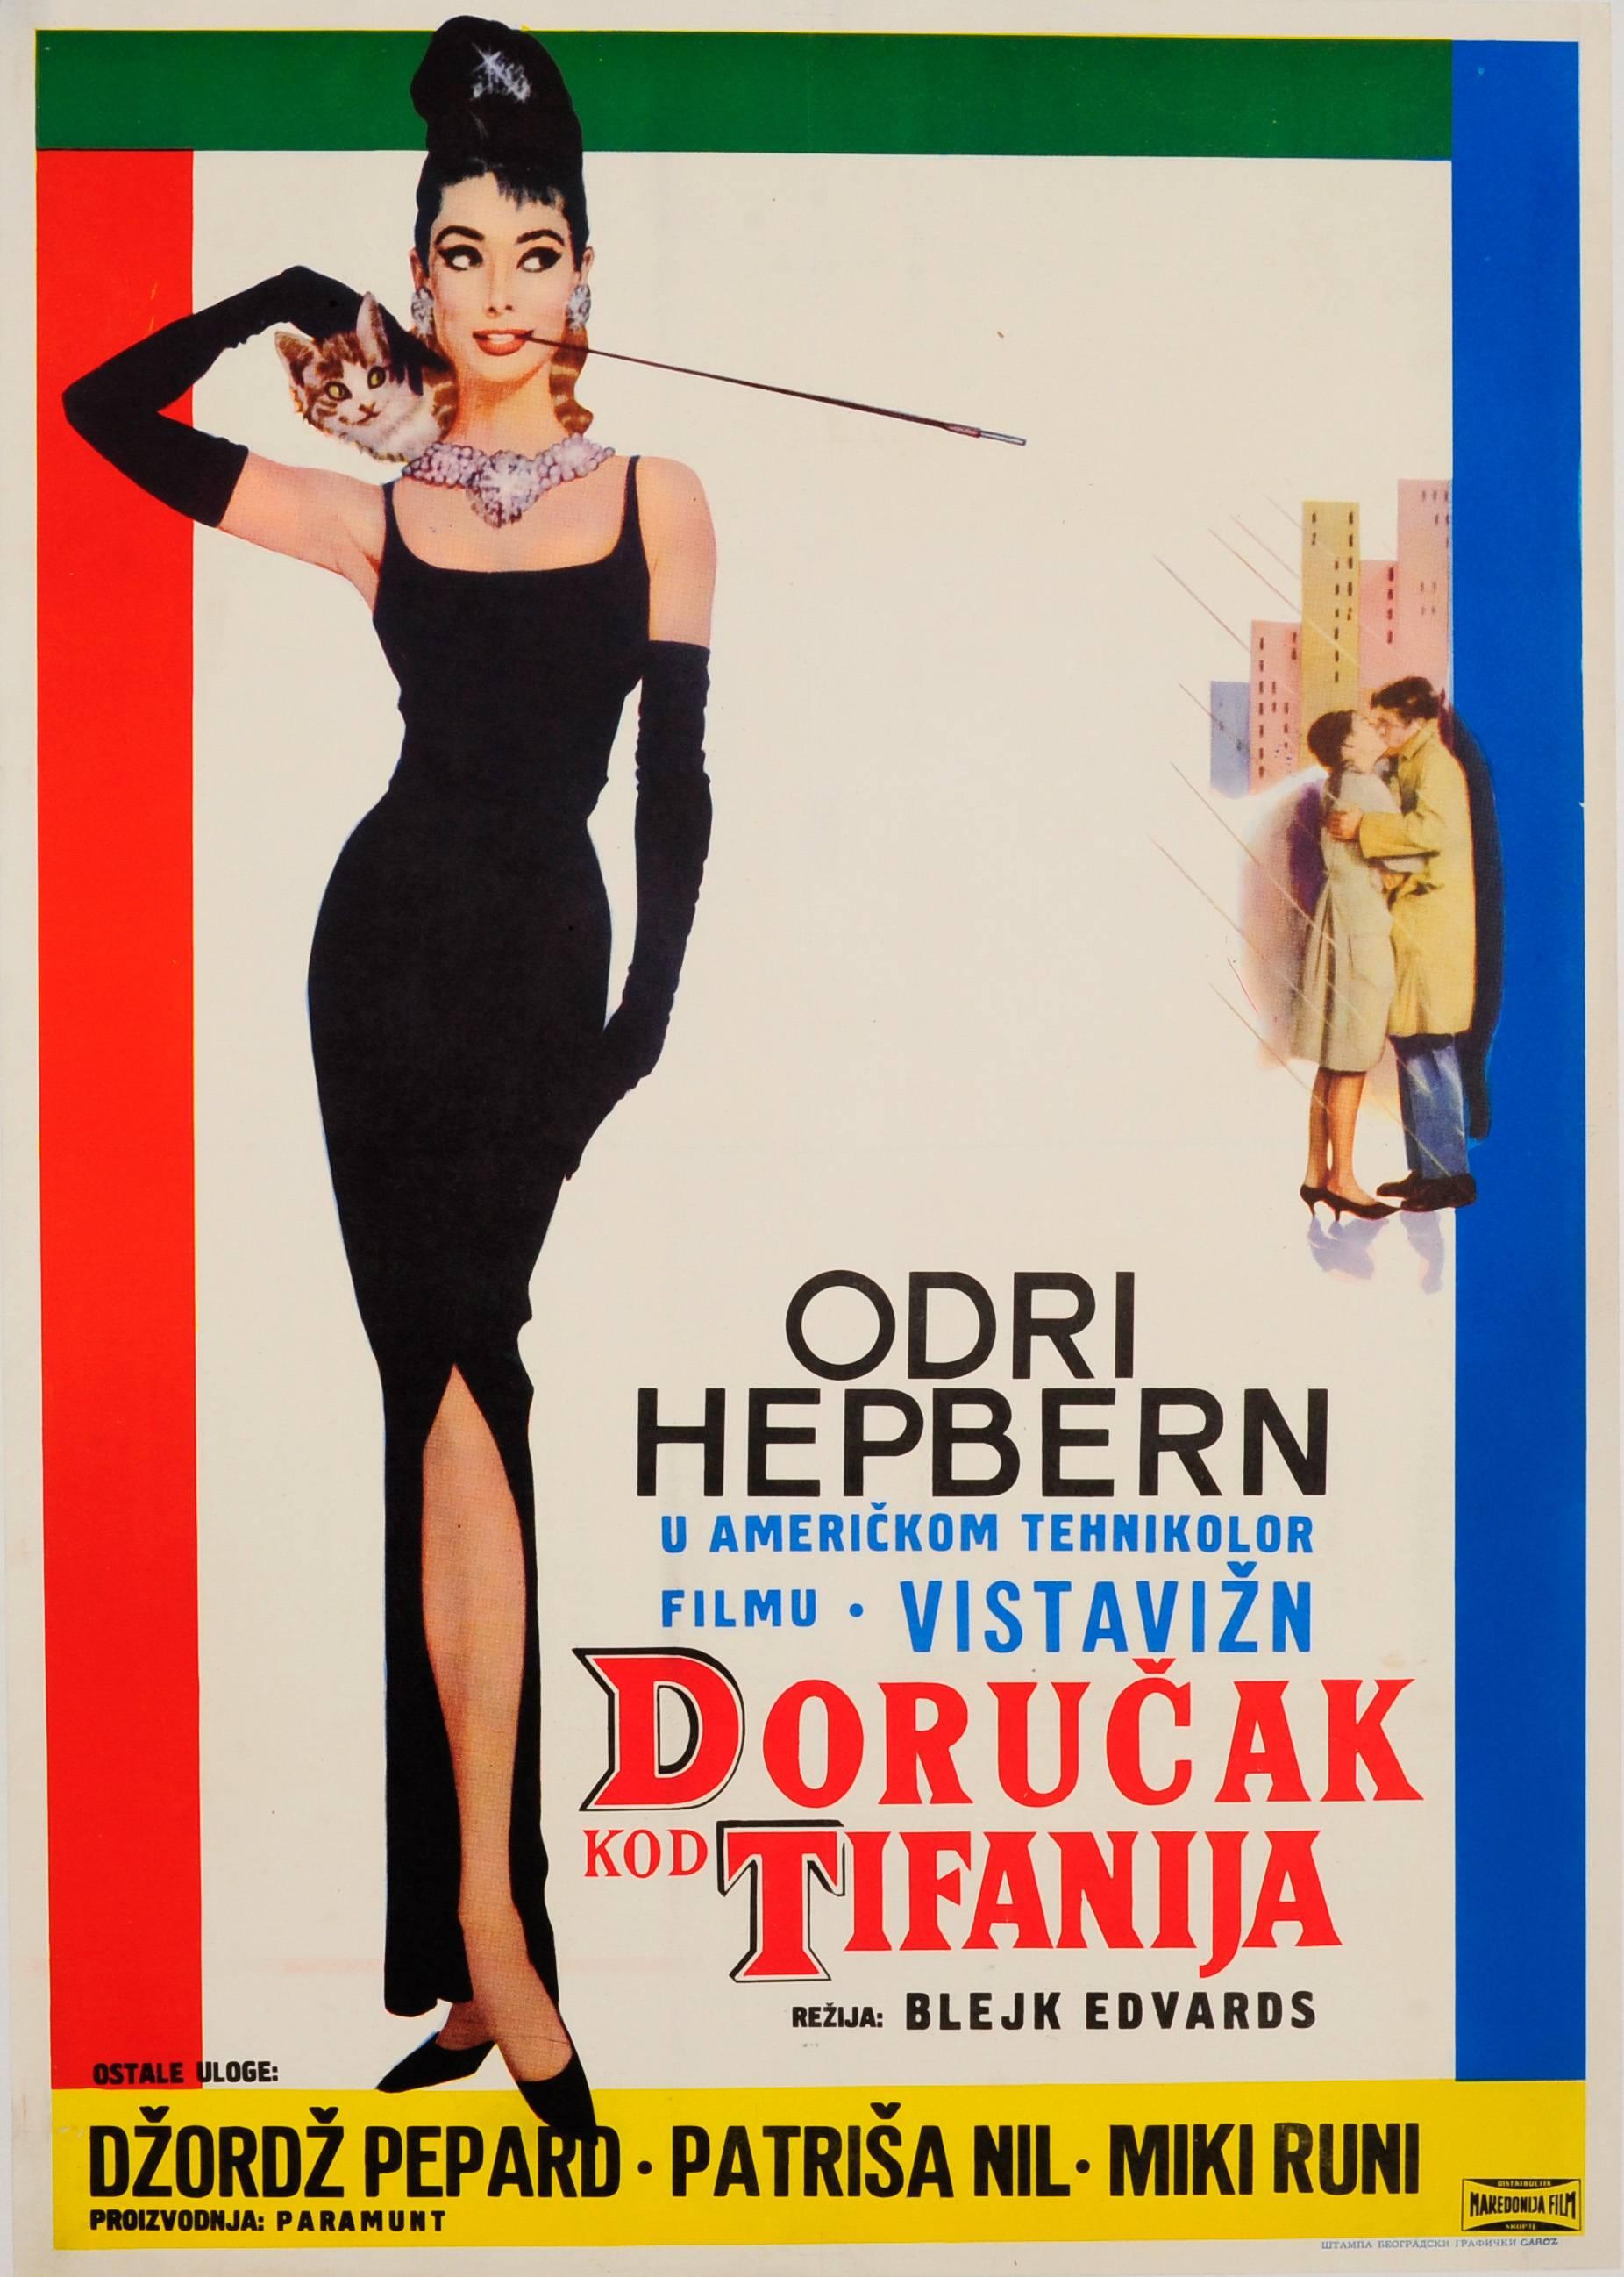 Robert E. McGinnis Print - Original Vintage Movie Poster For Breakfast At Tiffany's Starring Audrey Hepburn